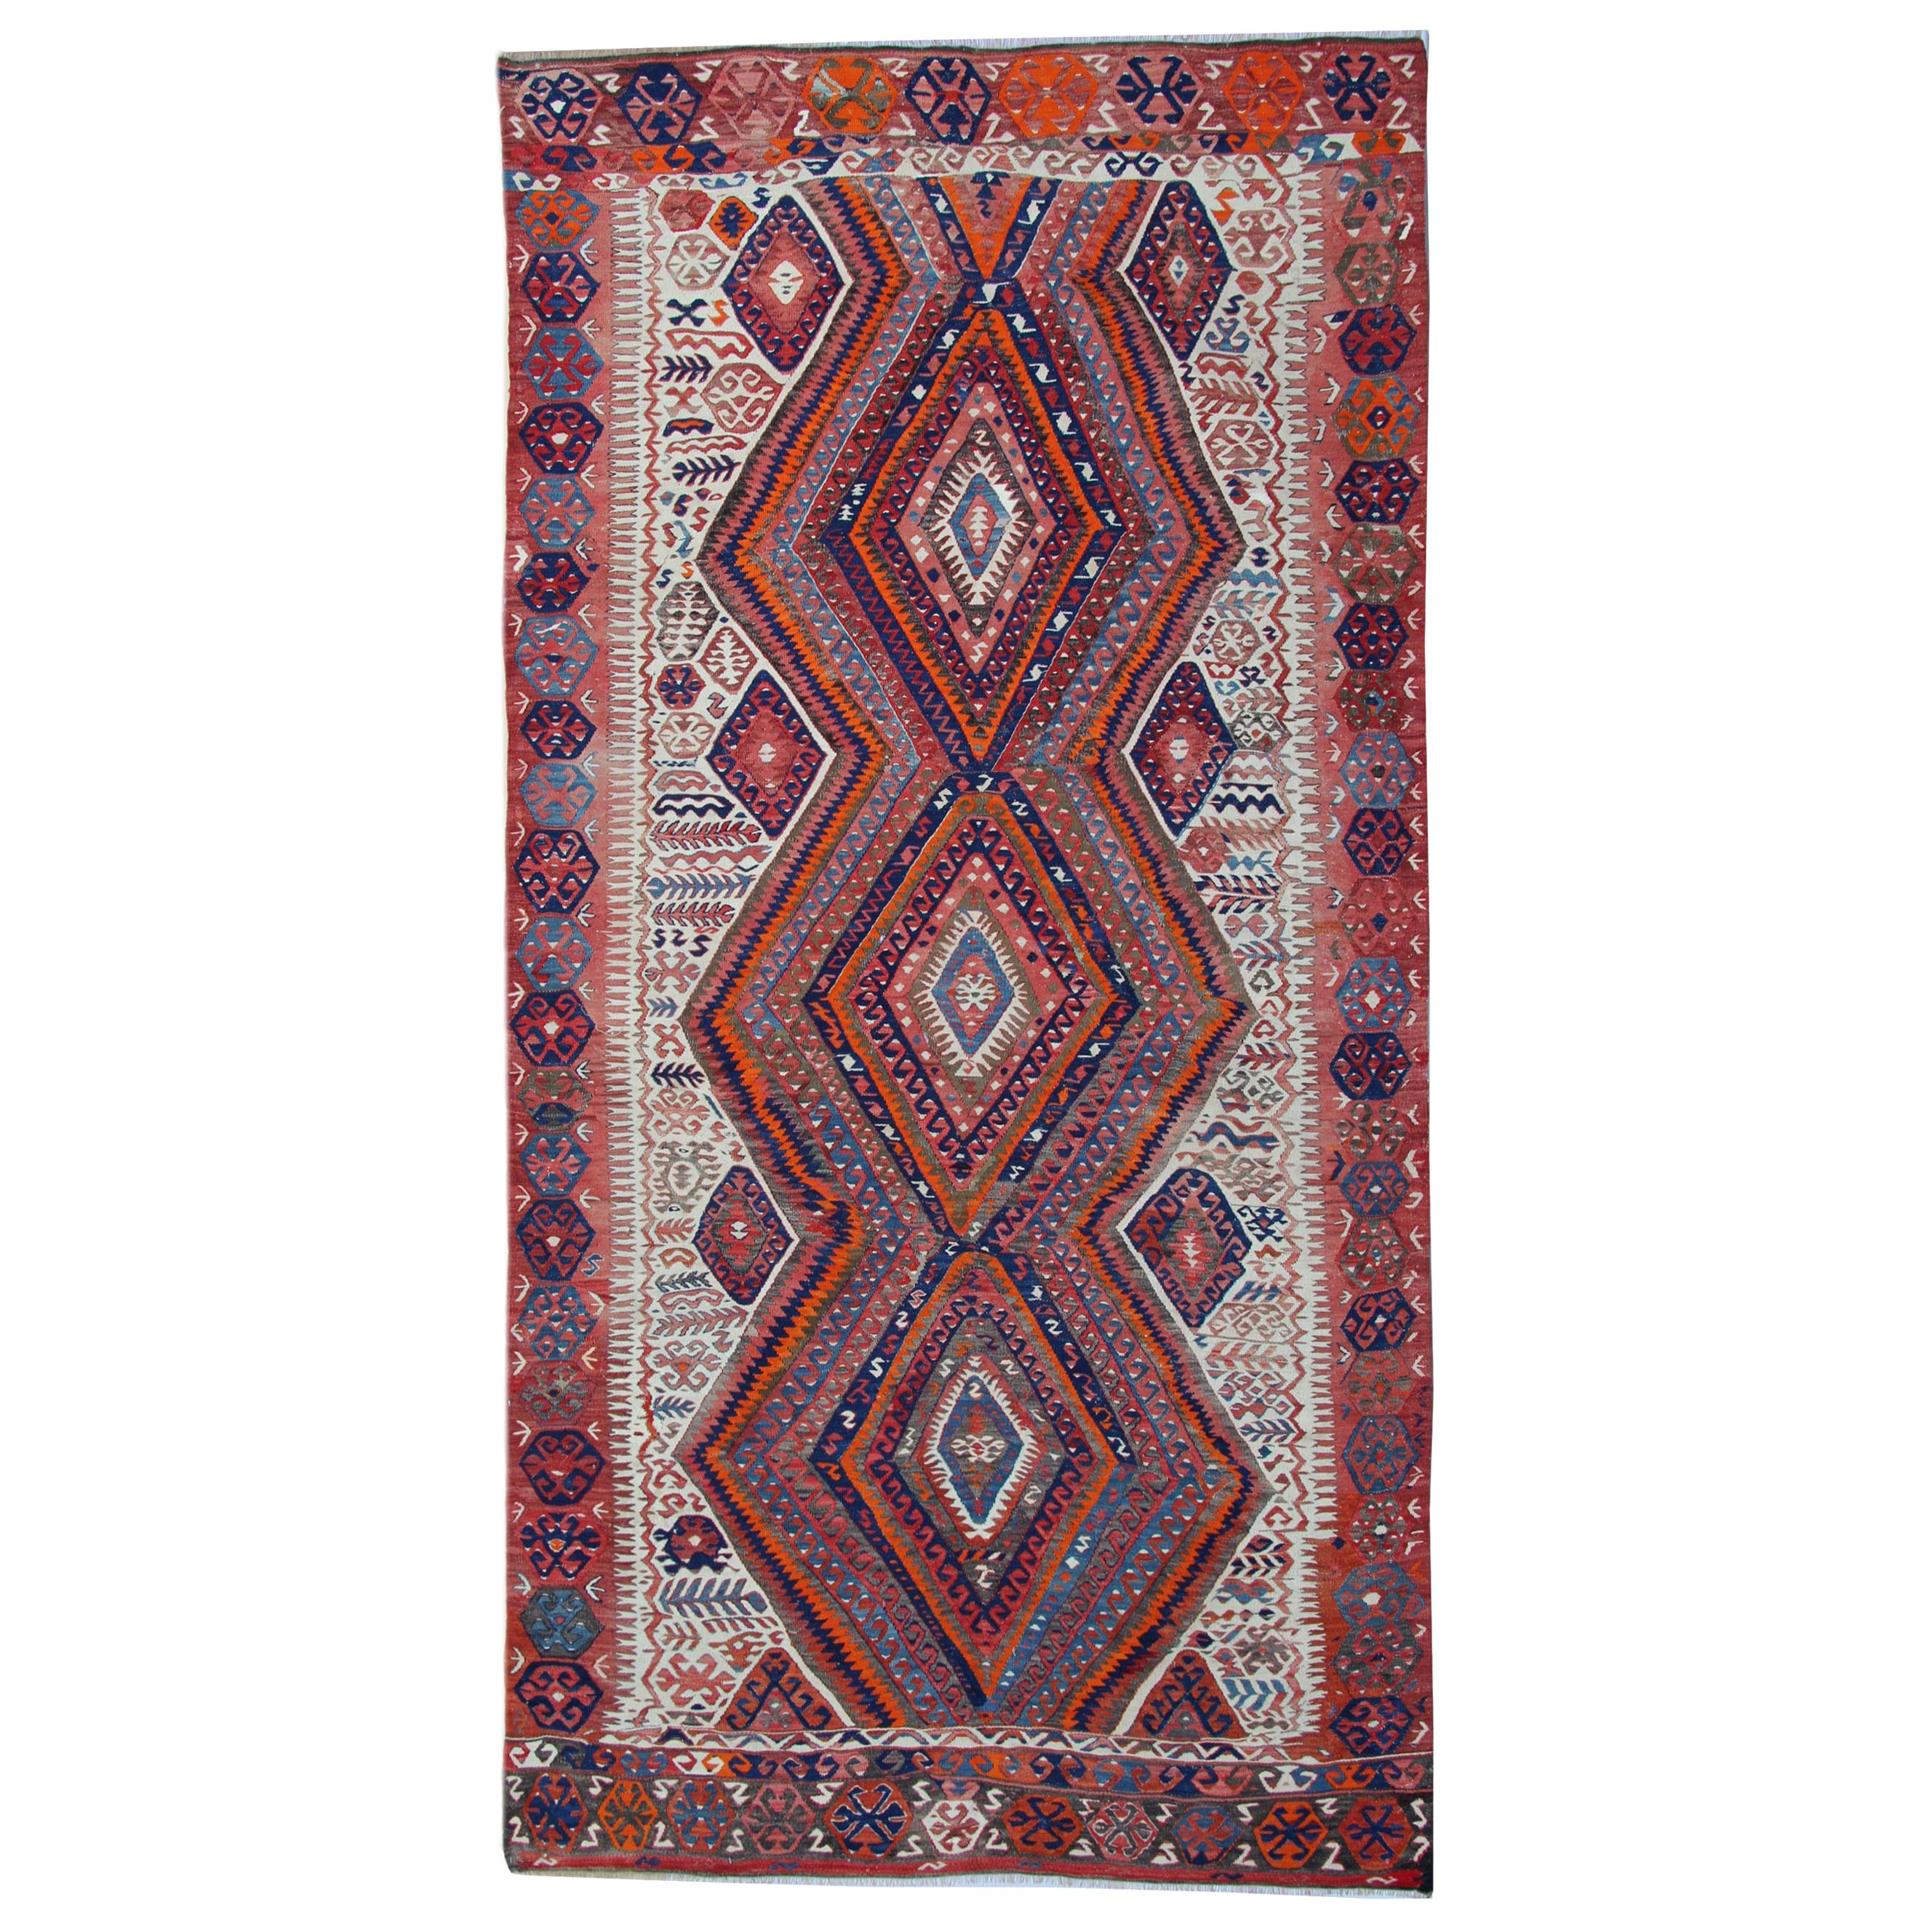 Antique Rugs Turkish Handmade Carpet, Kilim Rugs, Oriental Rugs For Sale